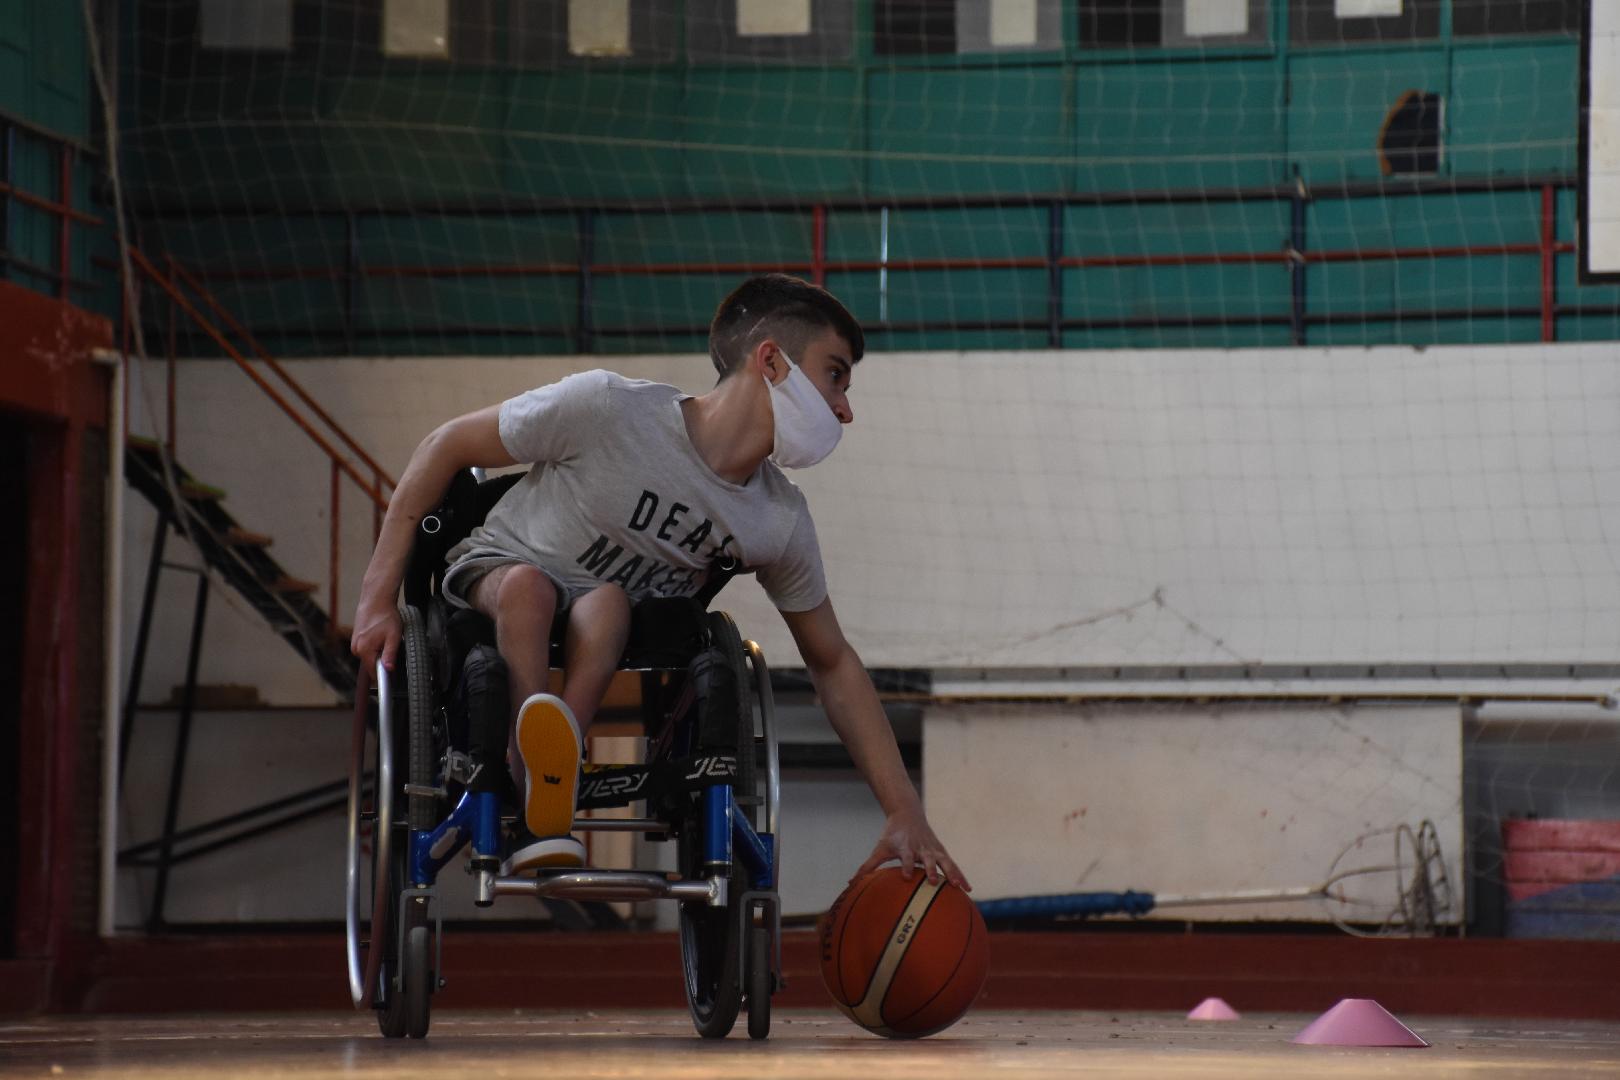 Escuela municipal de deporte paralÃ­mpico: un espacio de juego, deporte e inclusiÃ³n